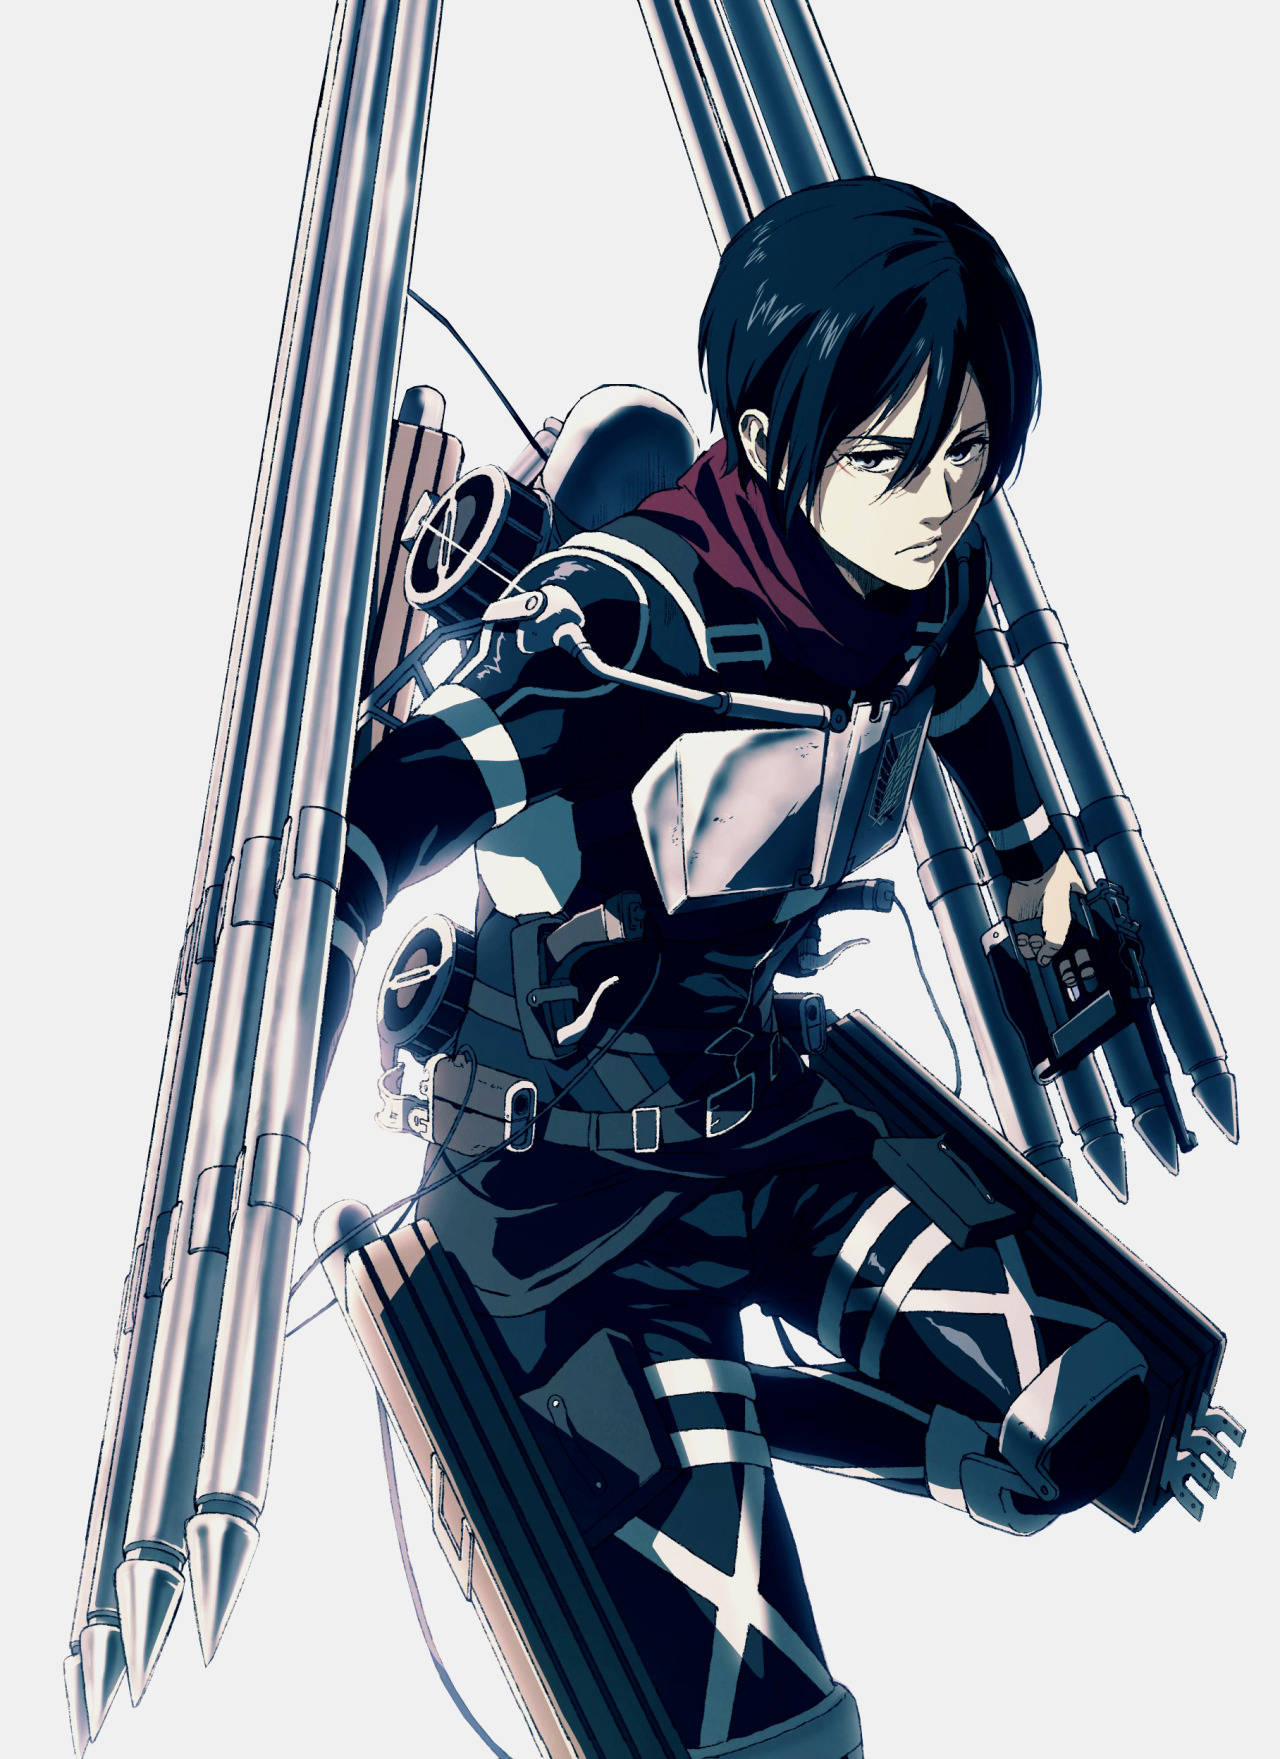 Mikasa Ackerman Thunder Spear